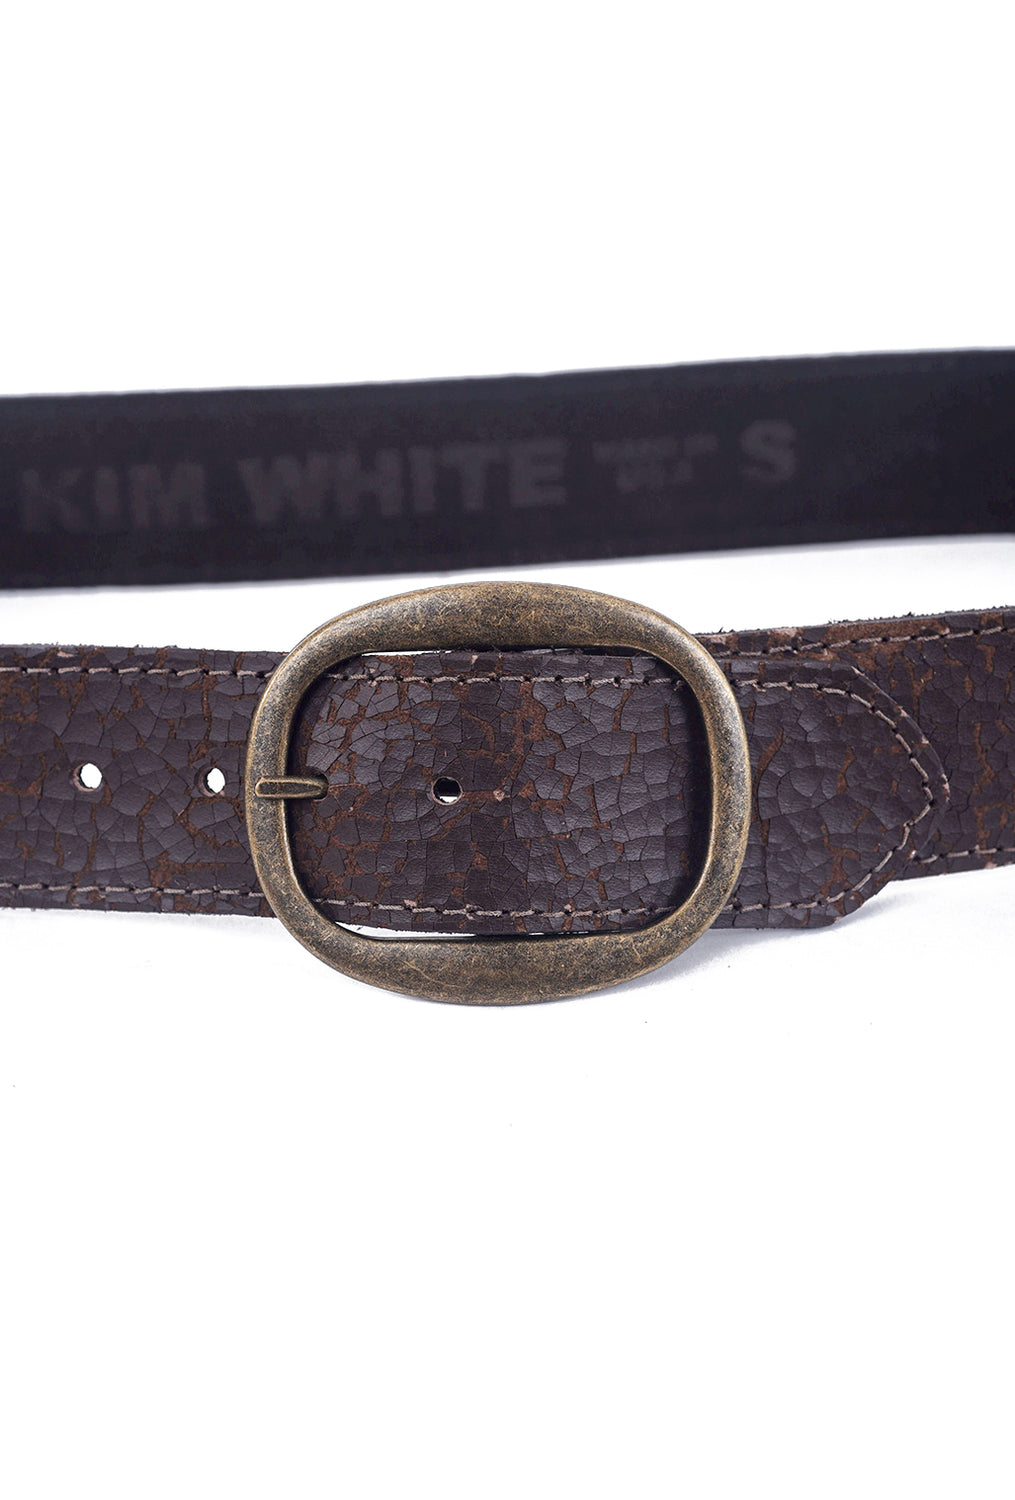 Kim White Heirloom Basic Belt, Chocolate Brown 